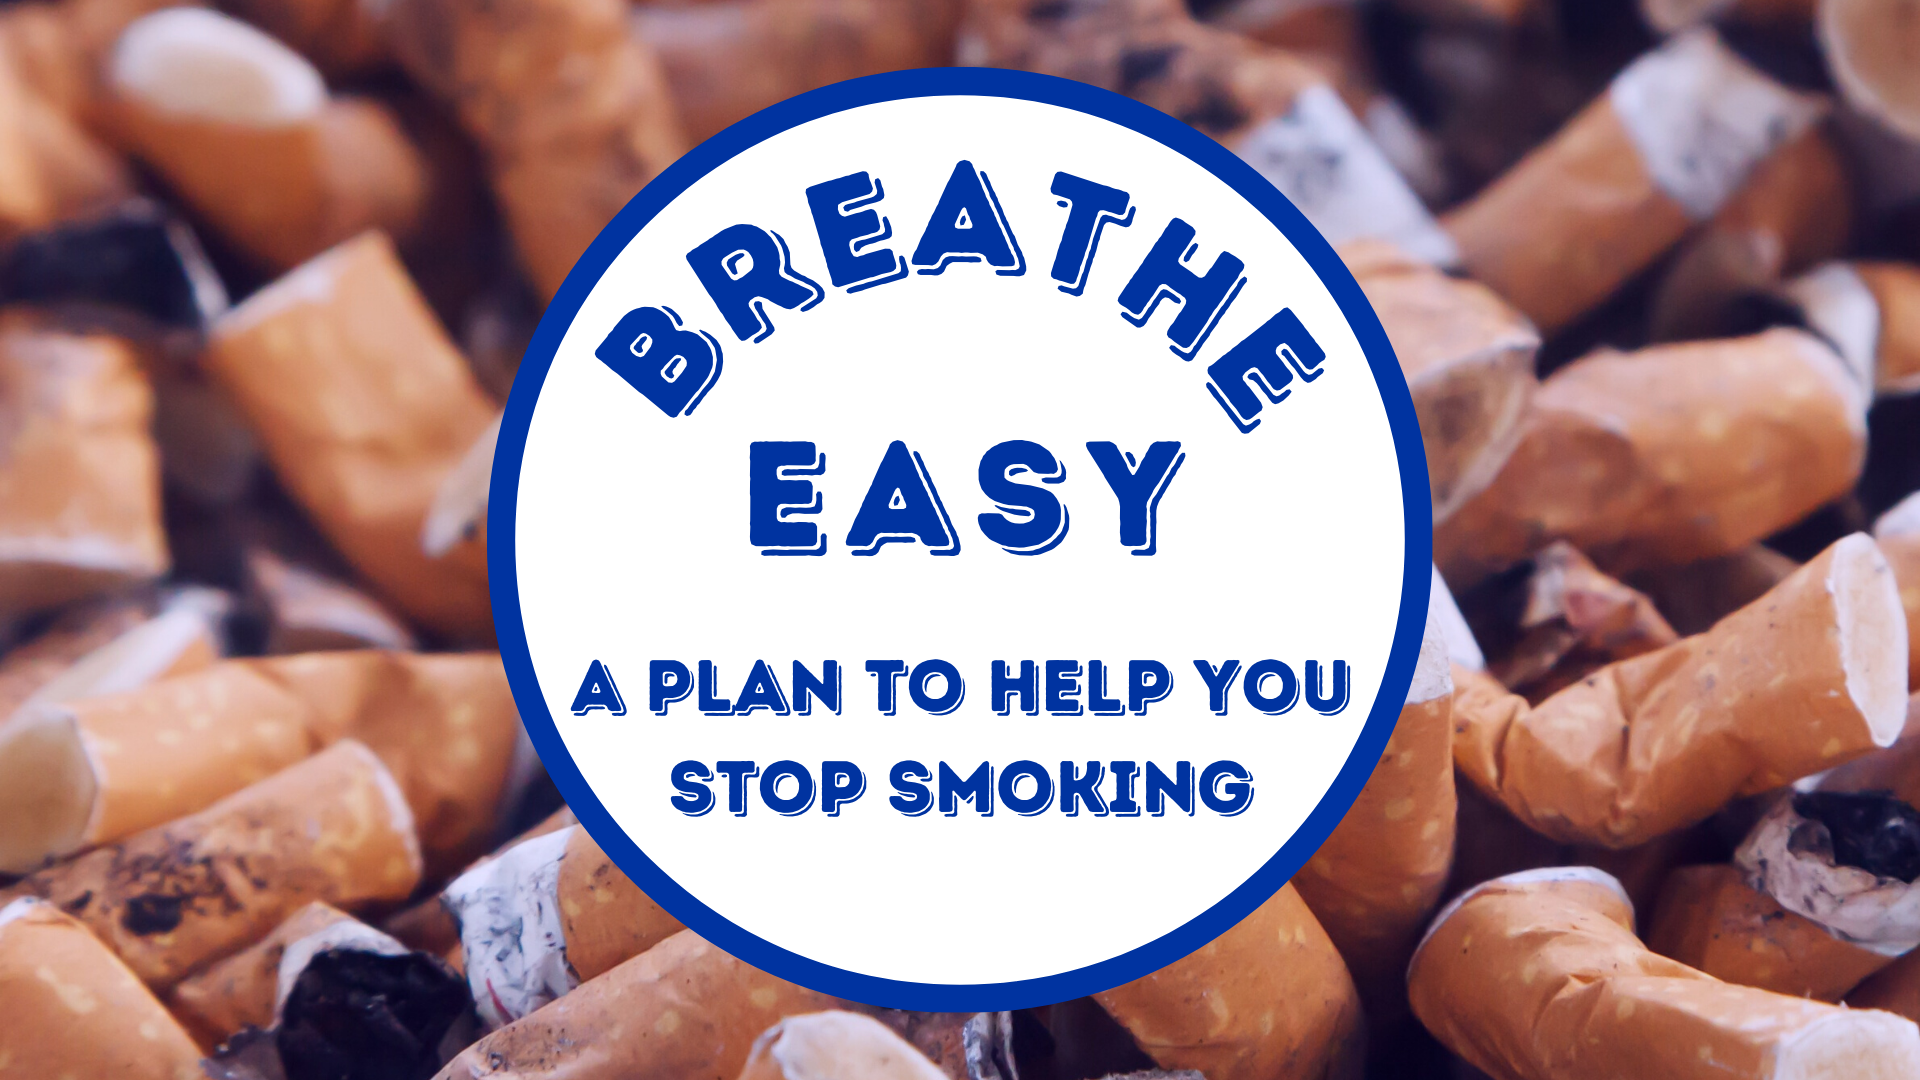 breathe easy logo